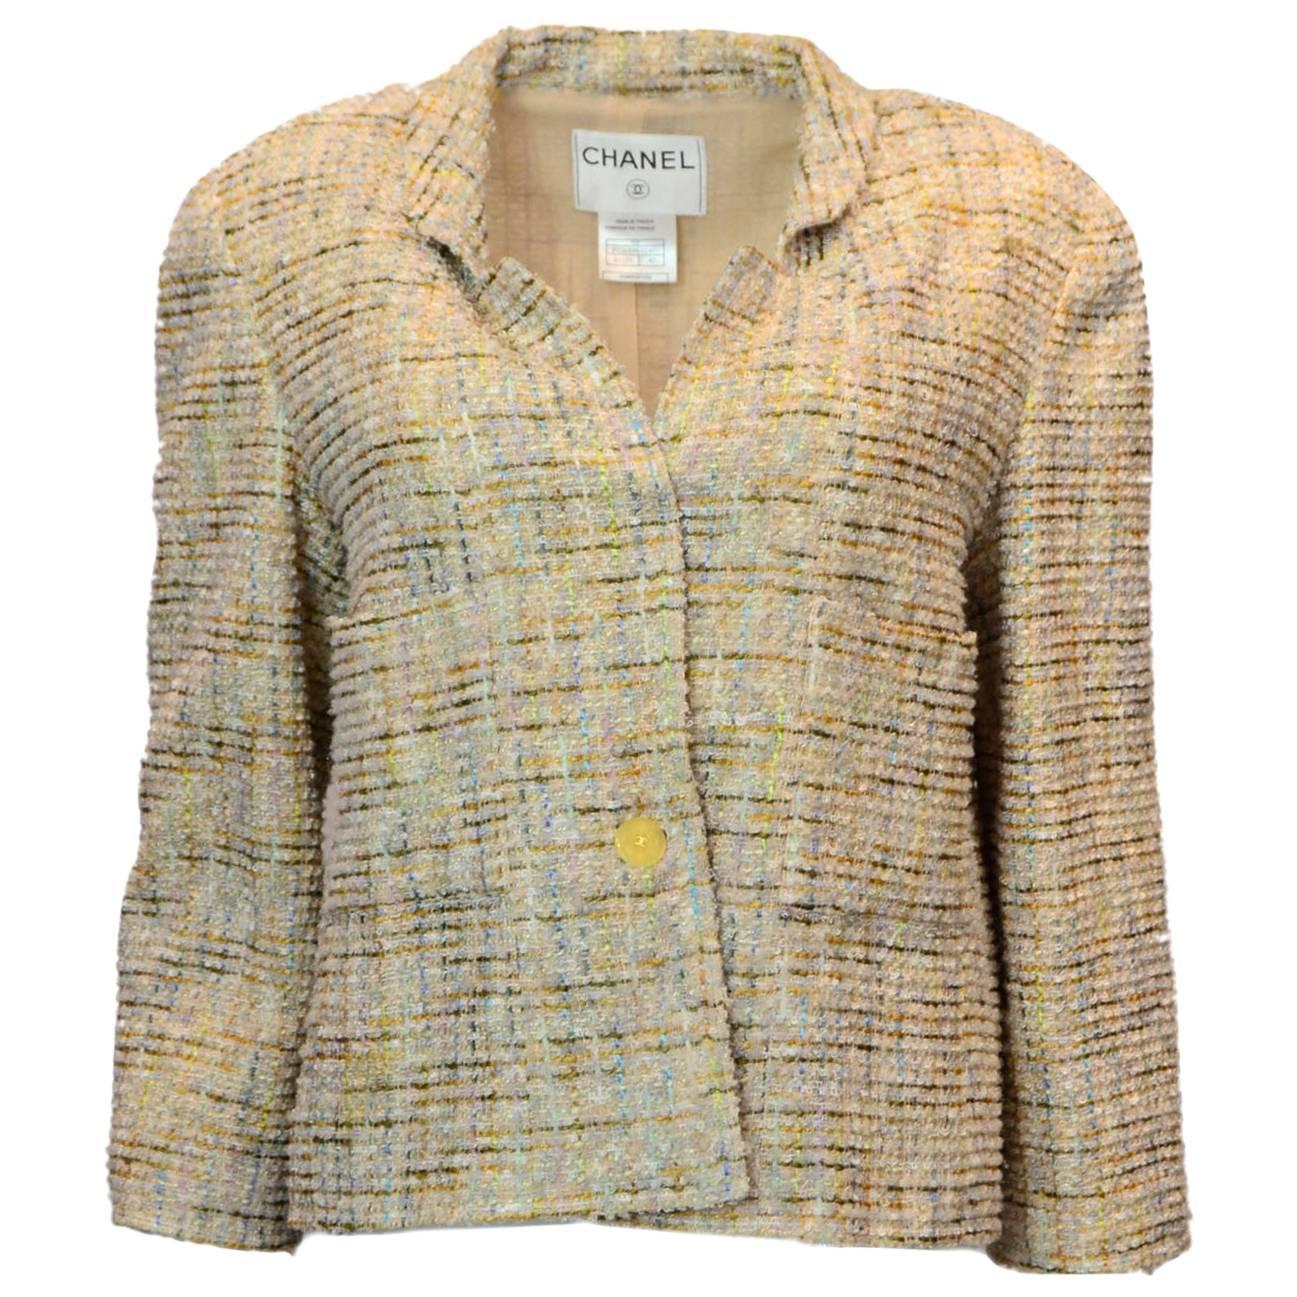 Chanel Beige & Multi-Colored Tweed Jacket Sz FR42